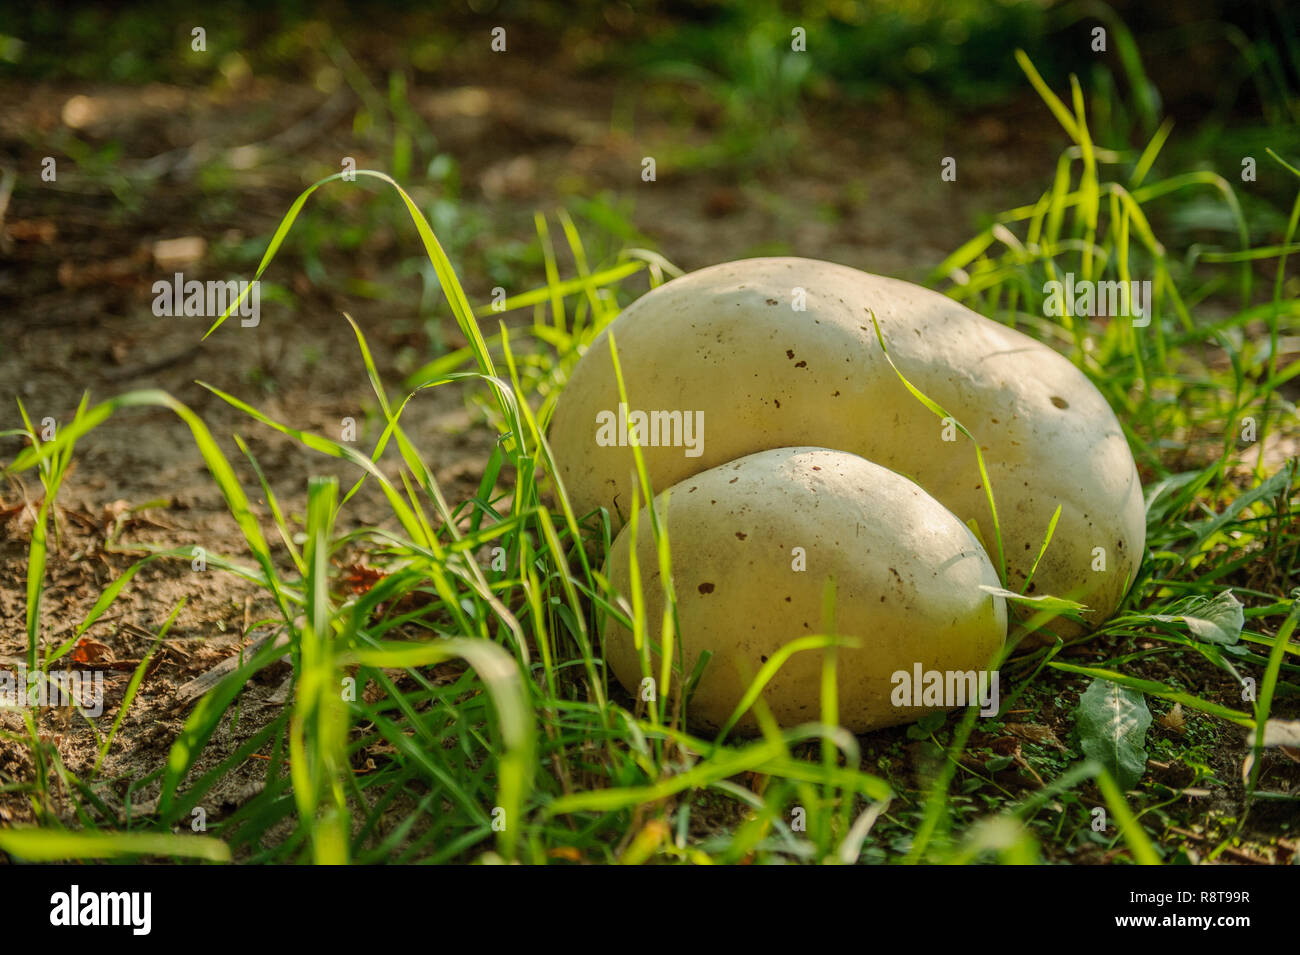 Gran bola de setas fotografías e imágenes de alta resolución - Alamy